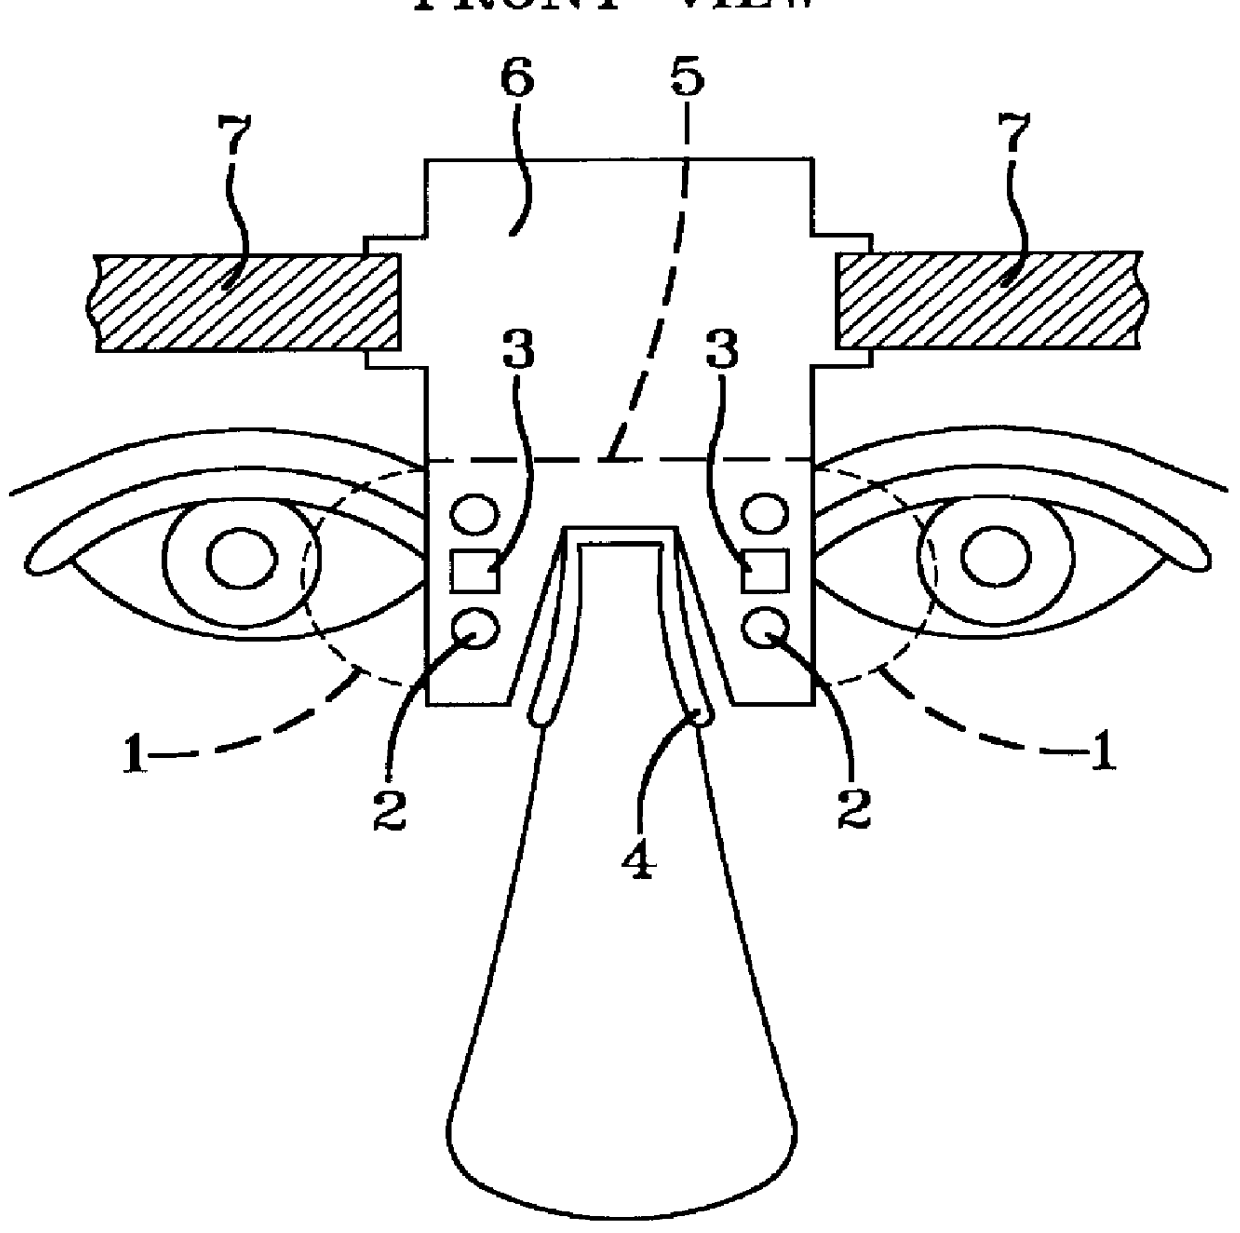 Adaptable eye movement measurement device